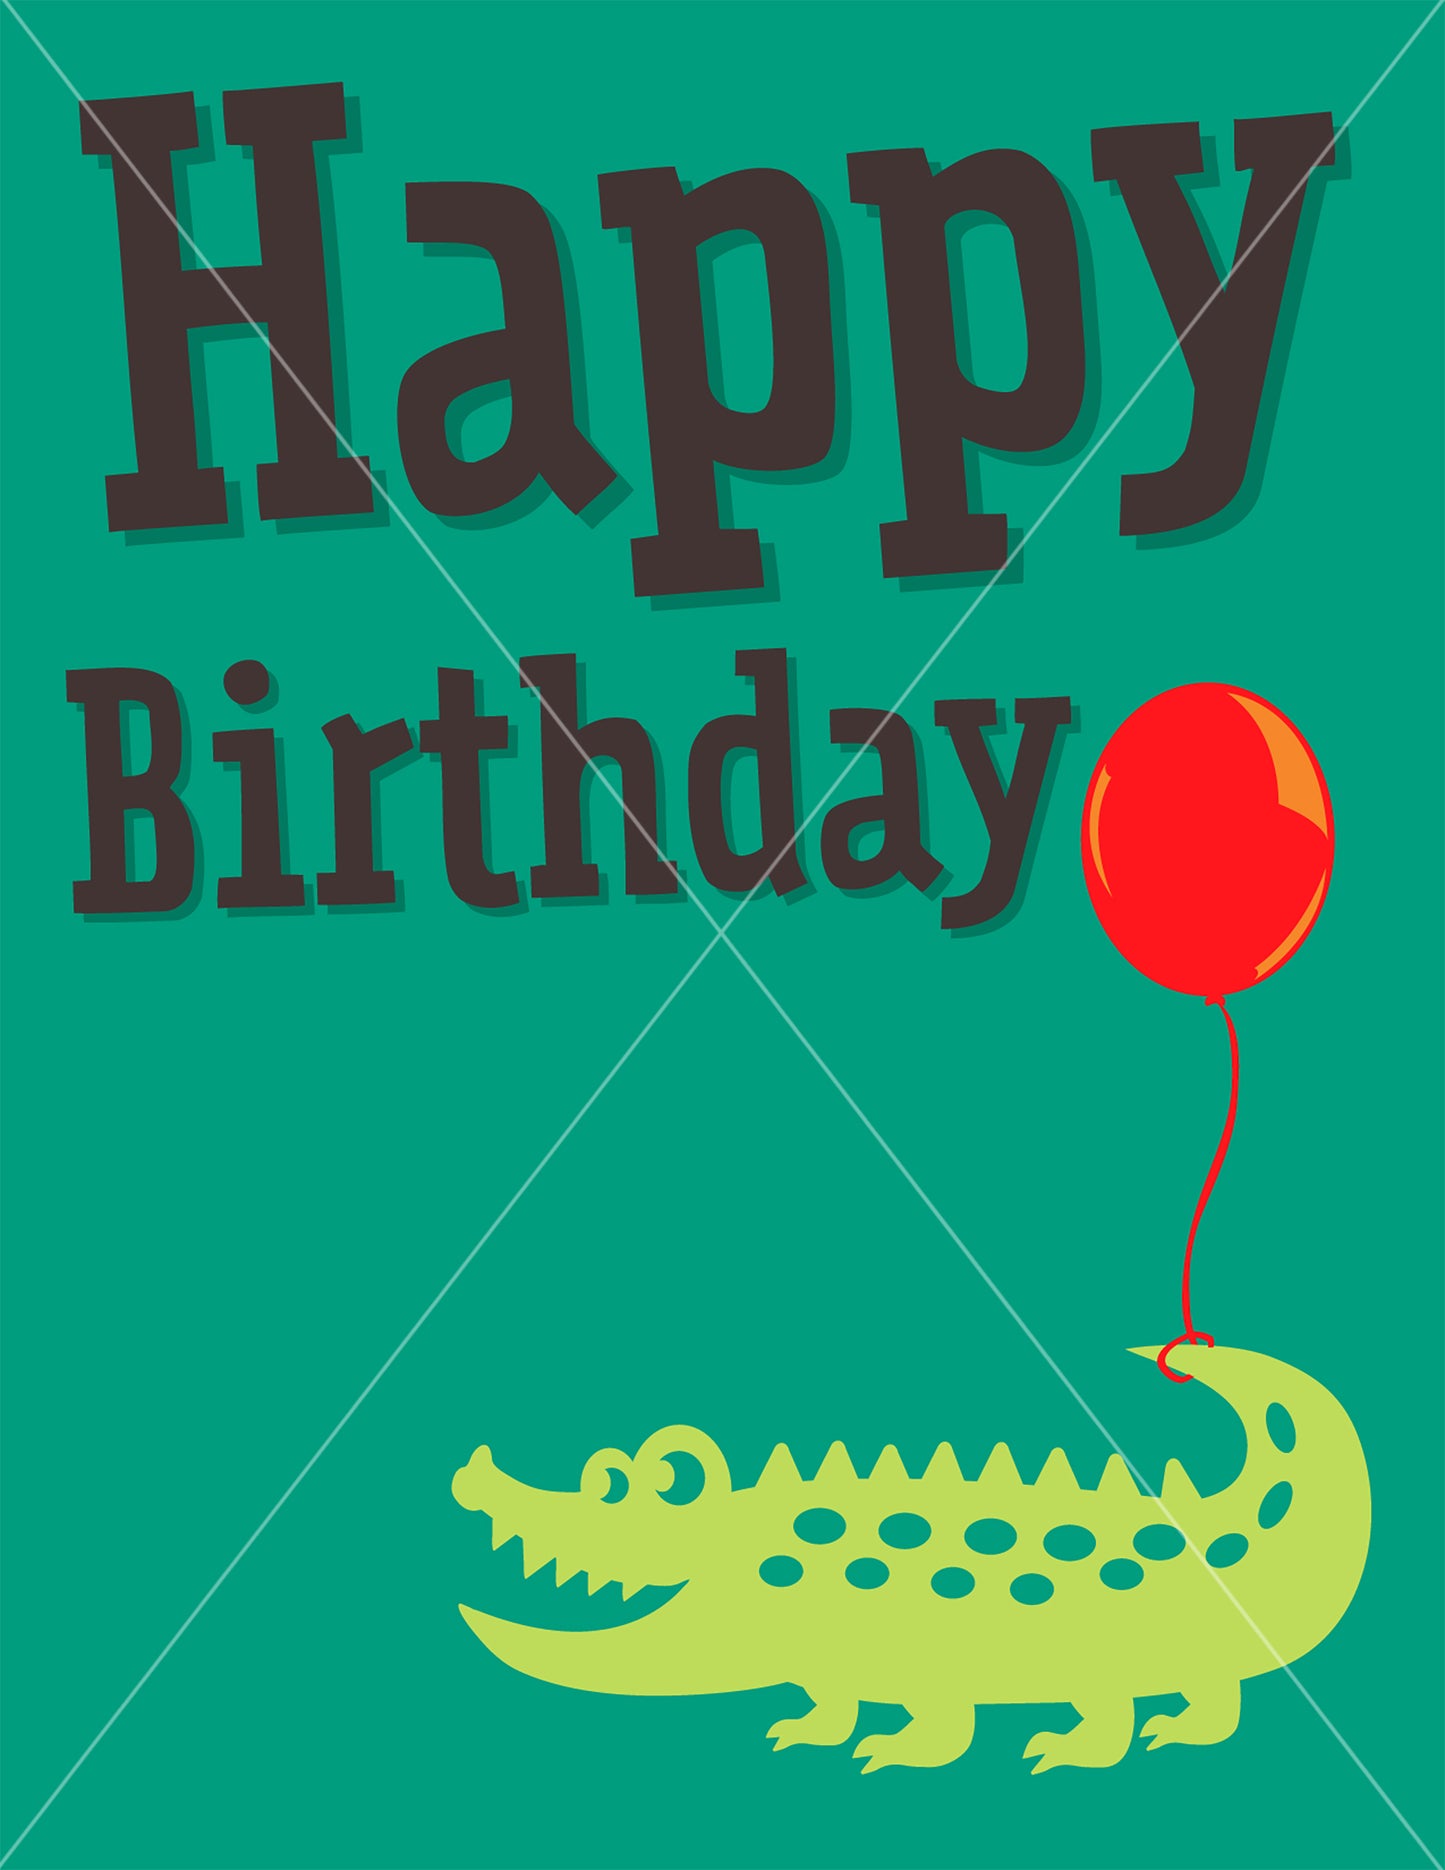 Alligator birthday greeting card background